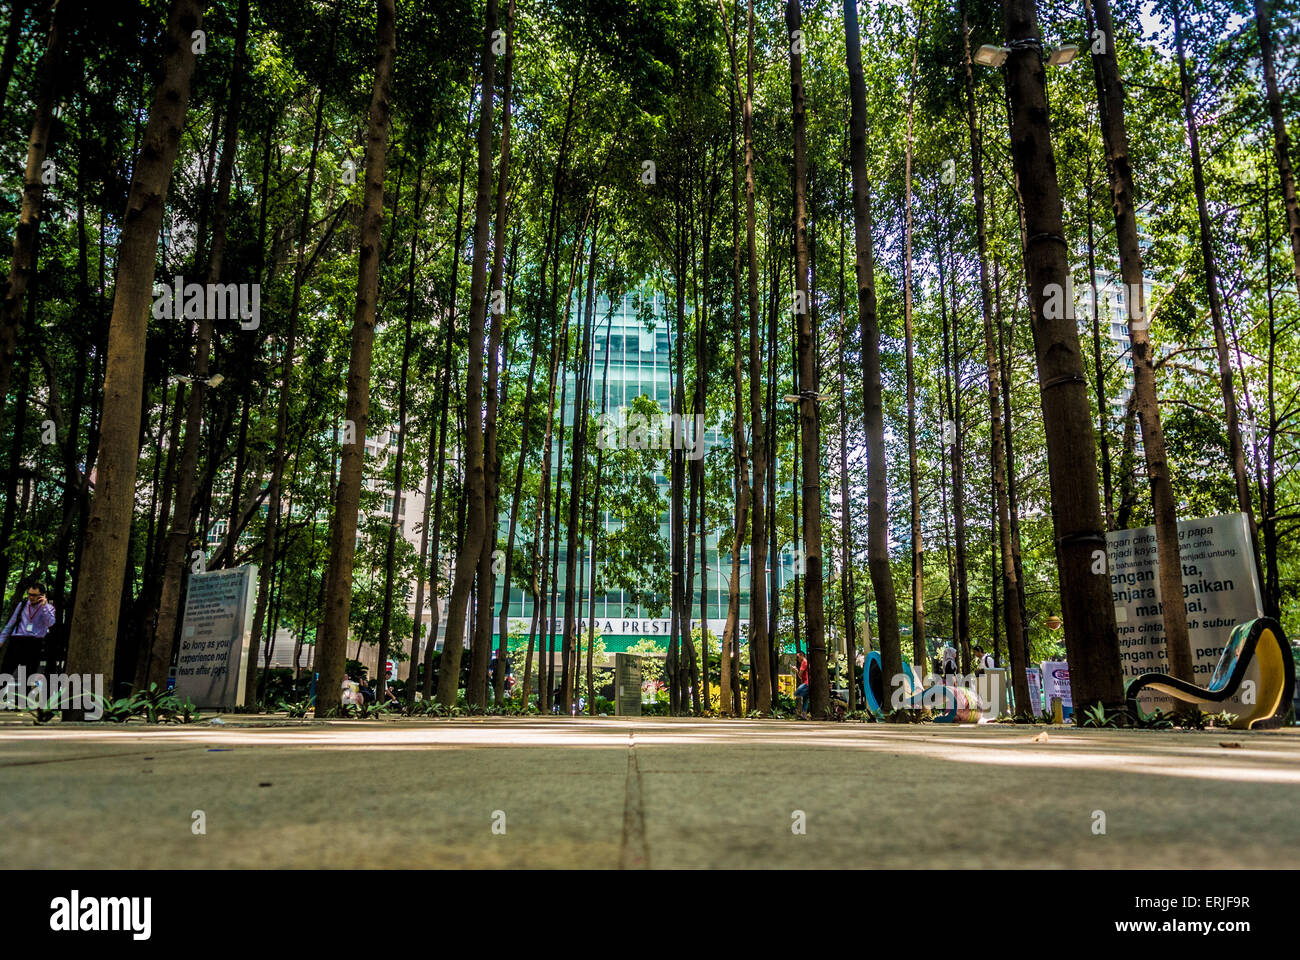 Centro citta' Parco, Kuala Lumpur, Malesia. Foto Stock